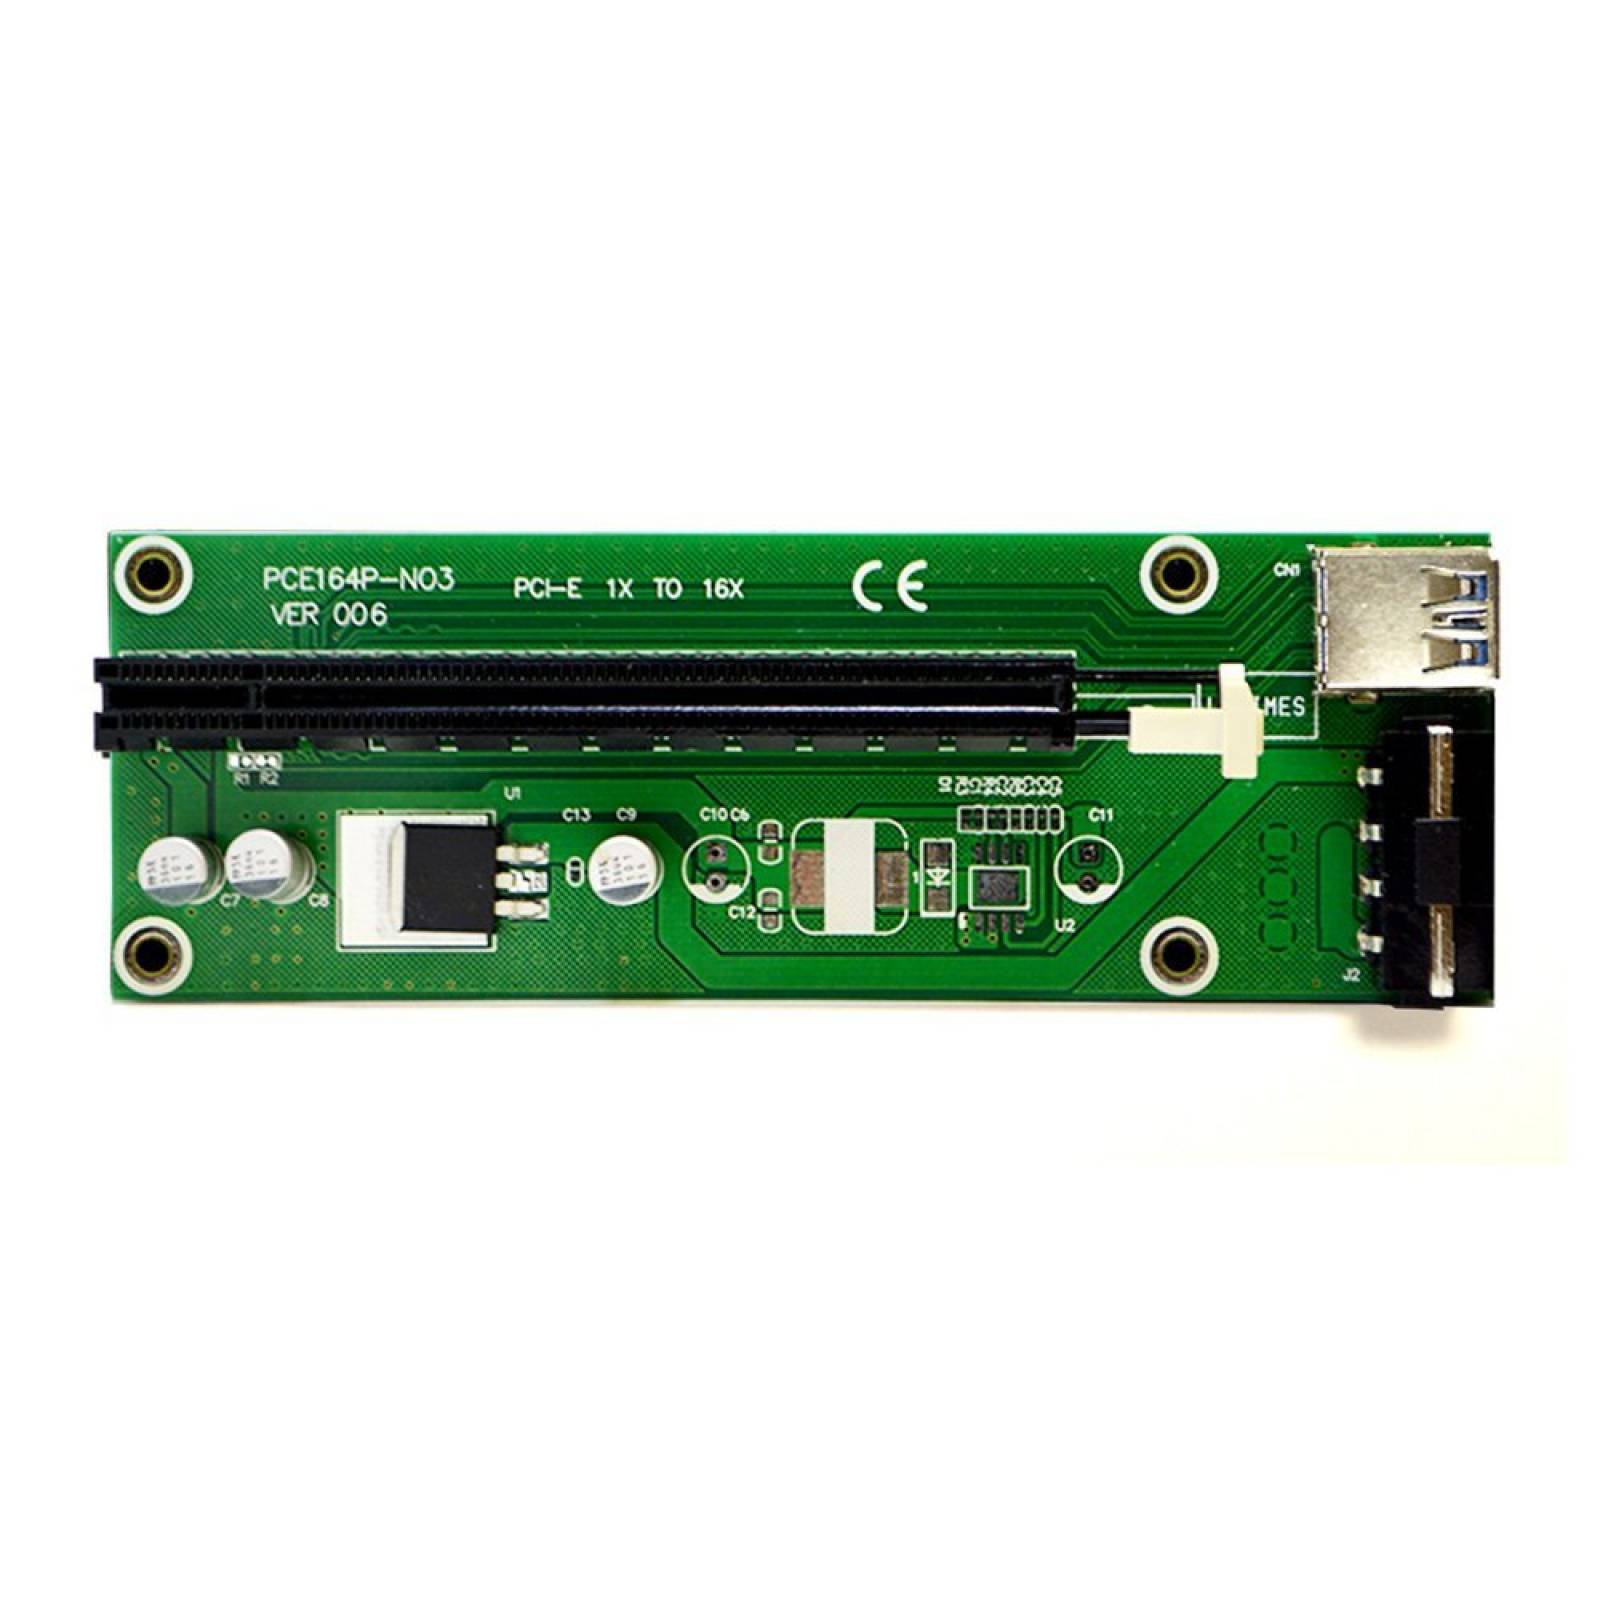 6-Pack PCIe VER 006 MintCell PCI-E 16x1xTarjeta ampliación p